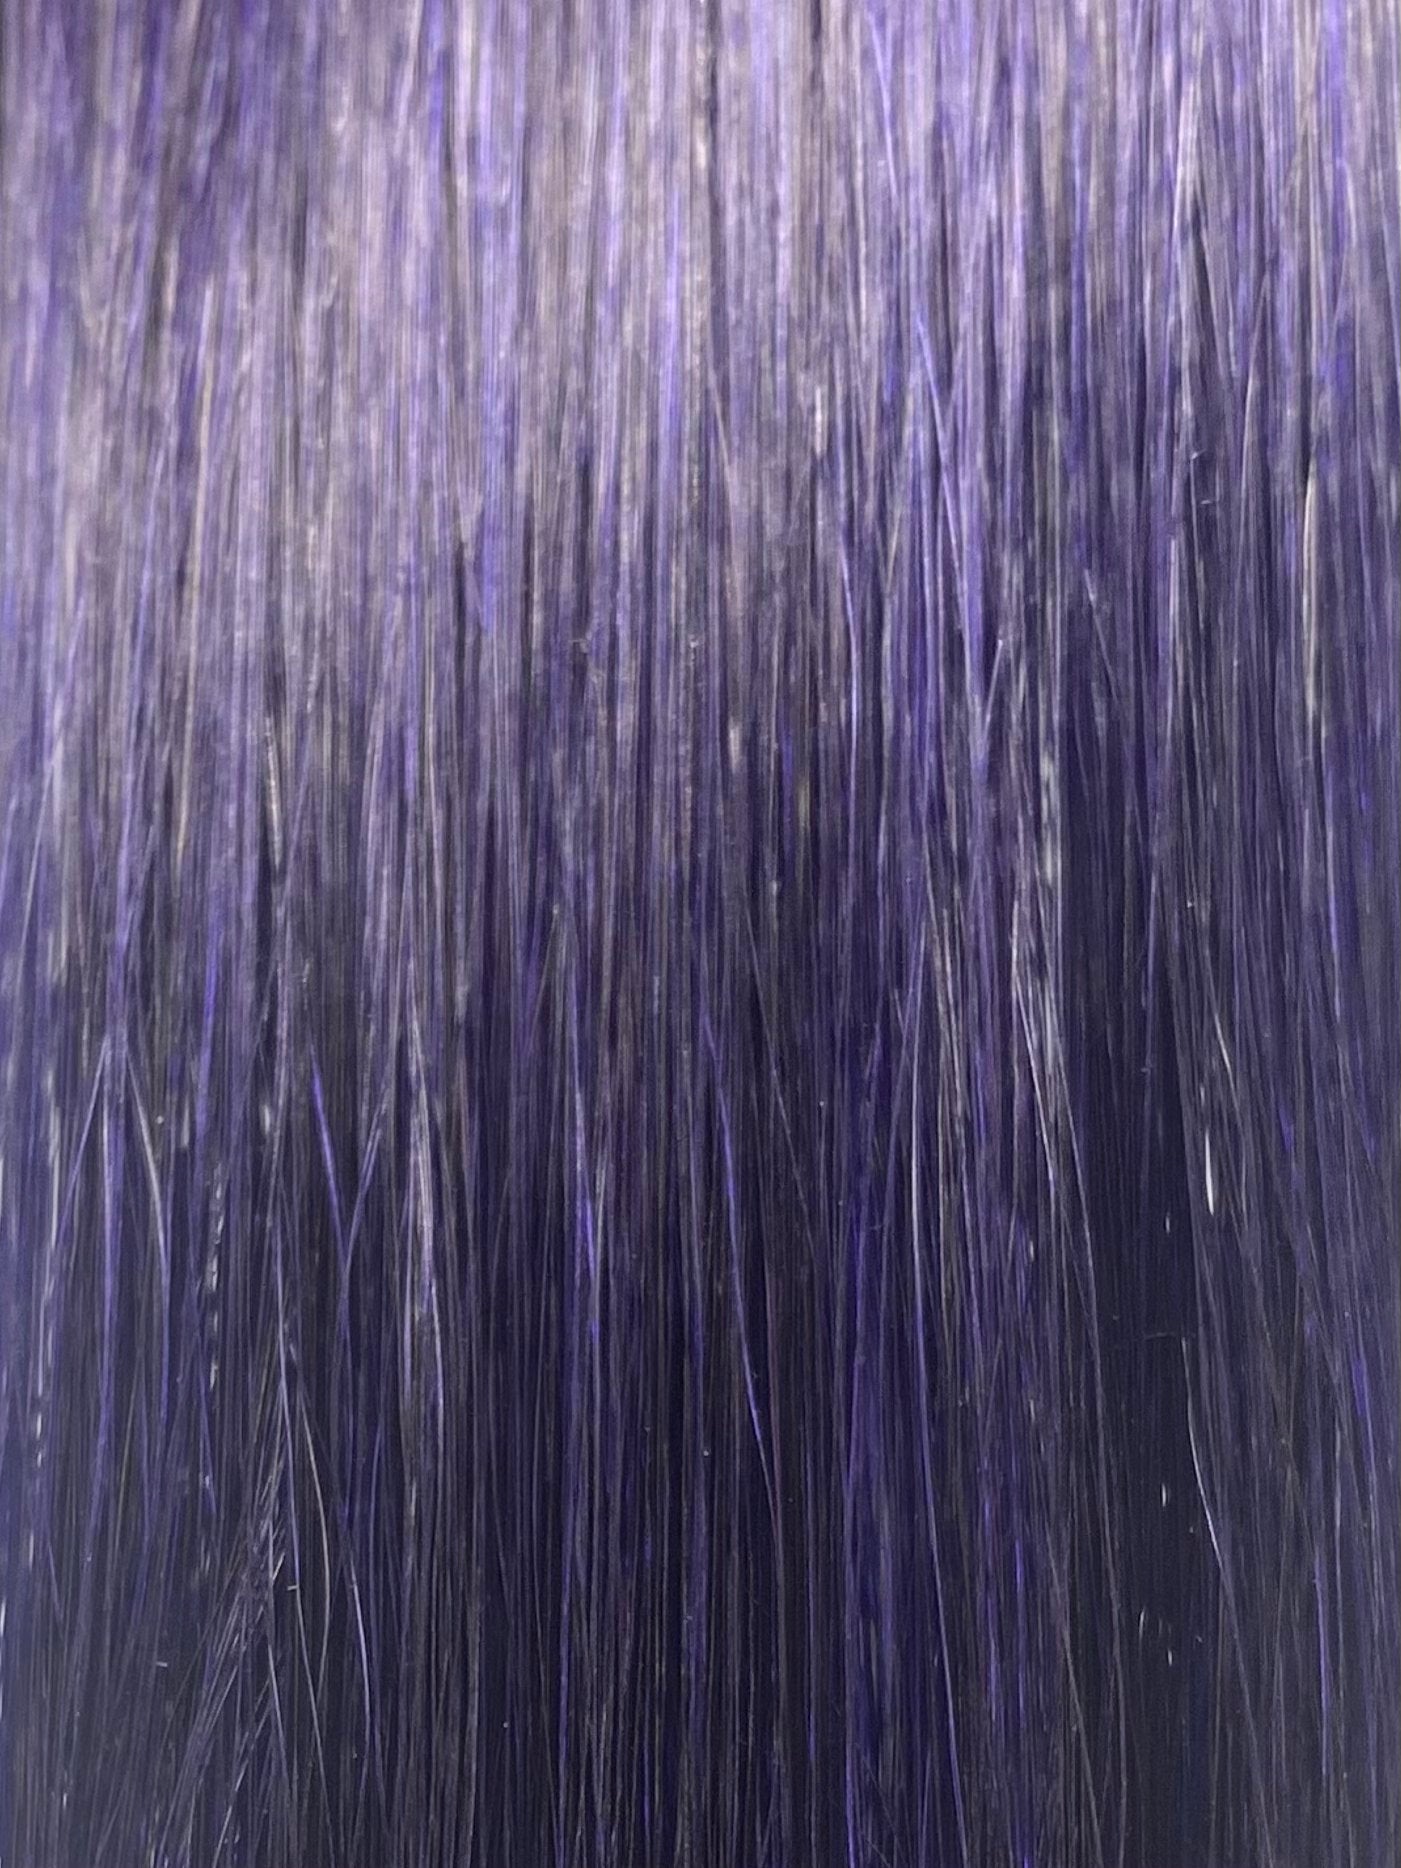 Fusion hair extensions #NewPurple - Fantasy - 50cm/20 inches - New Purple Fusion Euro So Cap 